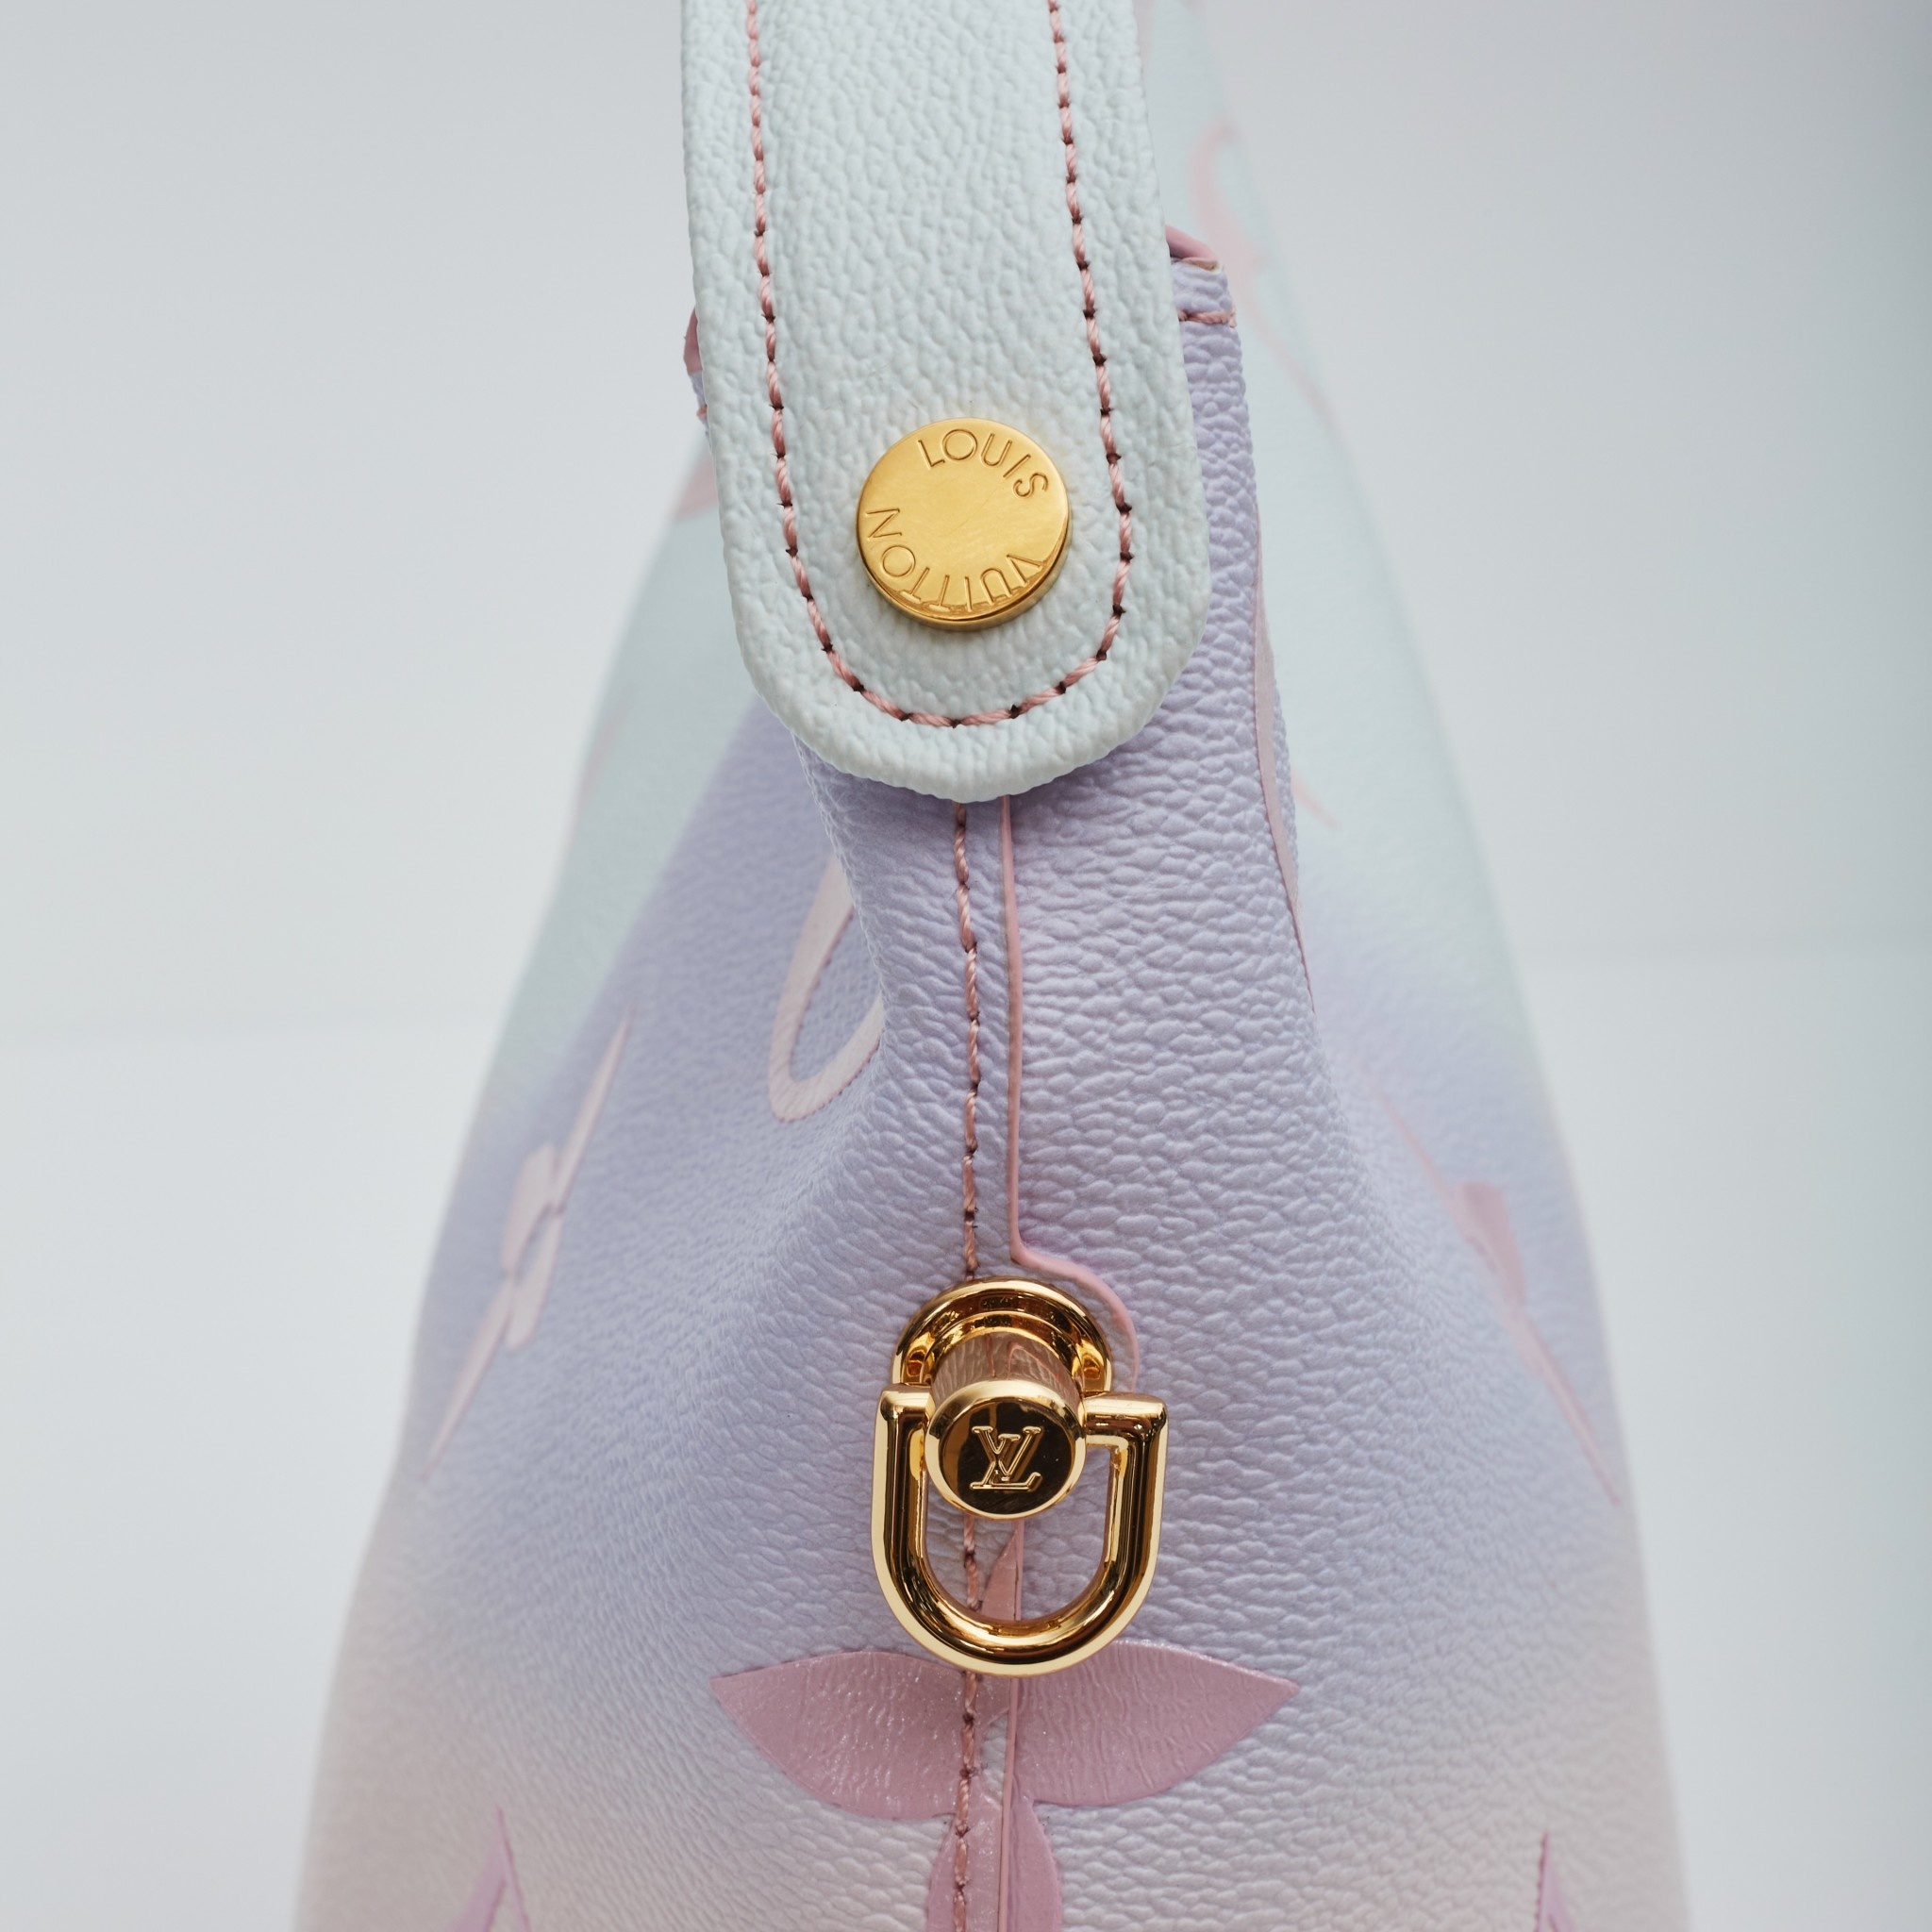 Louis Vuitton Marshmallow Bag, Bragmybag